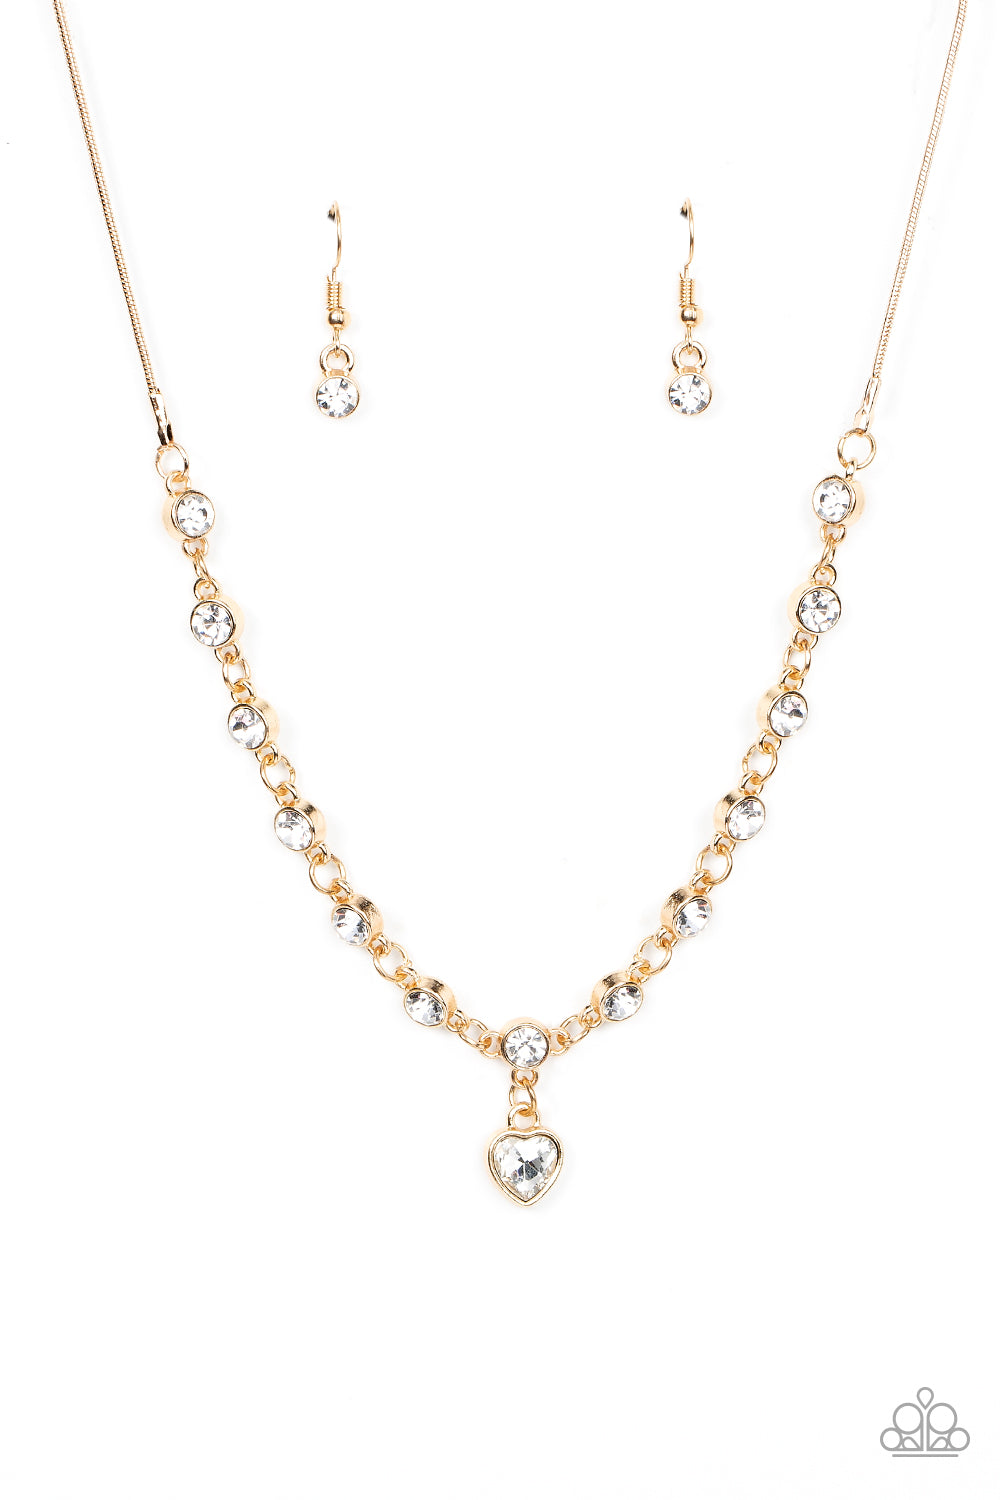 True Love Trinket - White Rhinestone Heart Gold Necklace - Paparazzi Accessories